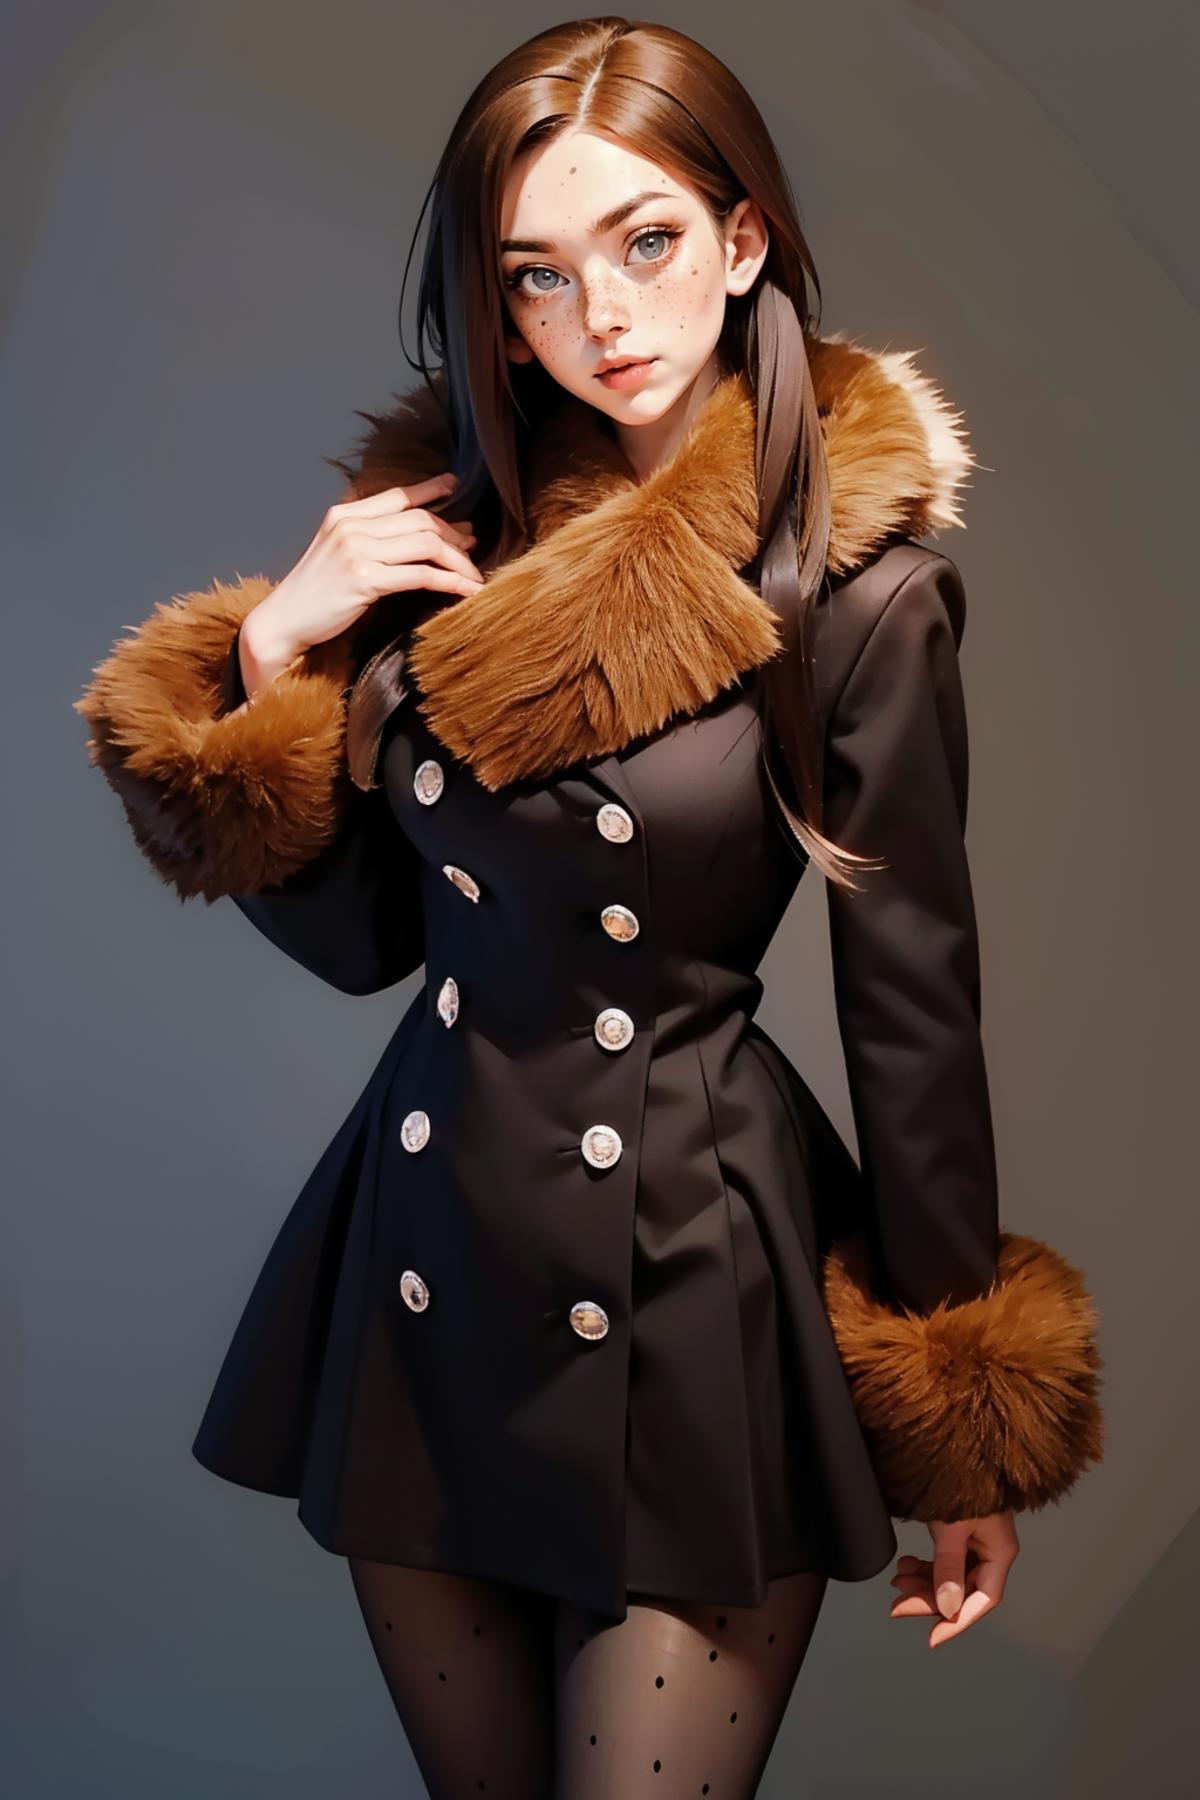 Fur Trim Jacket/Dress image by freckledvixon